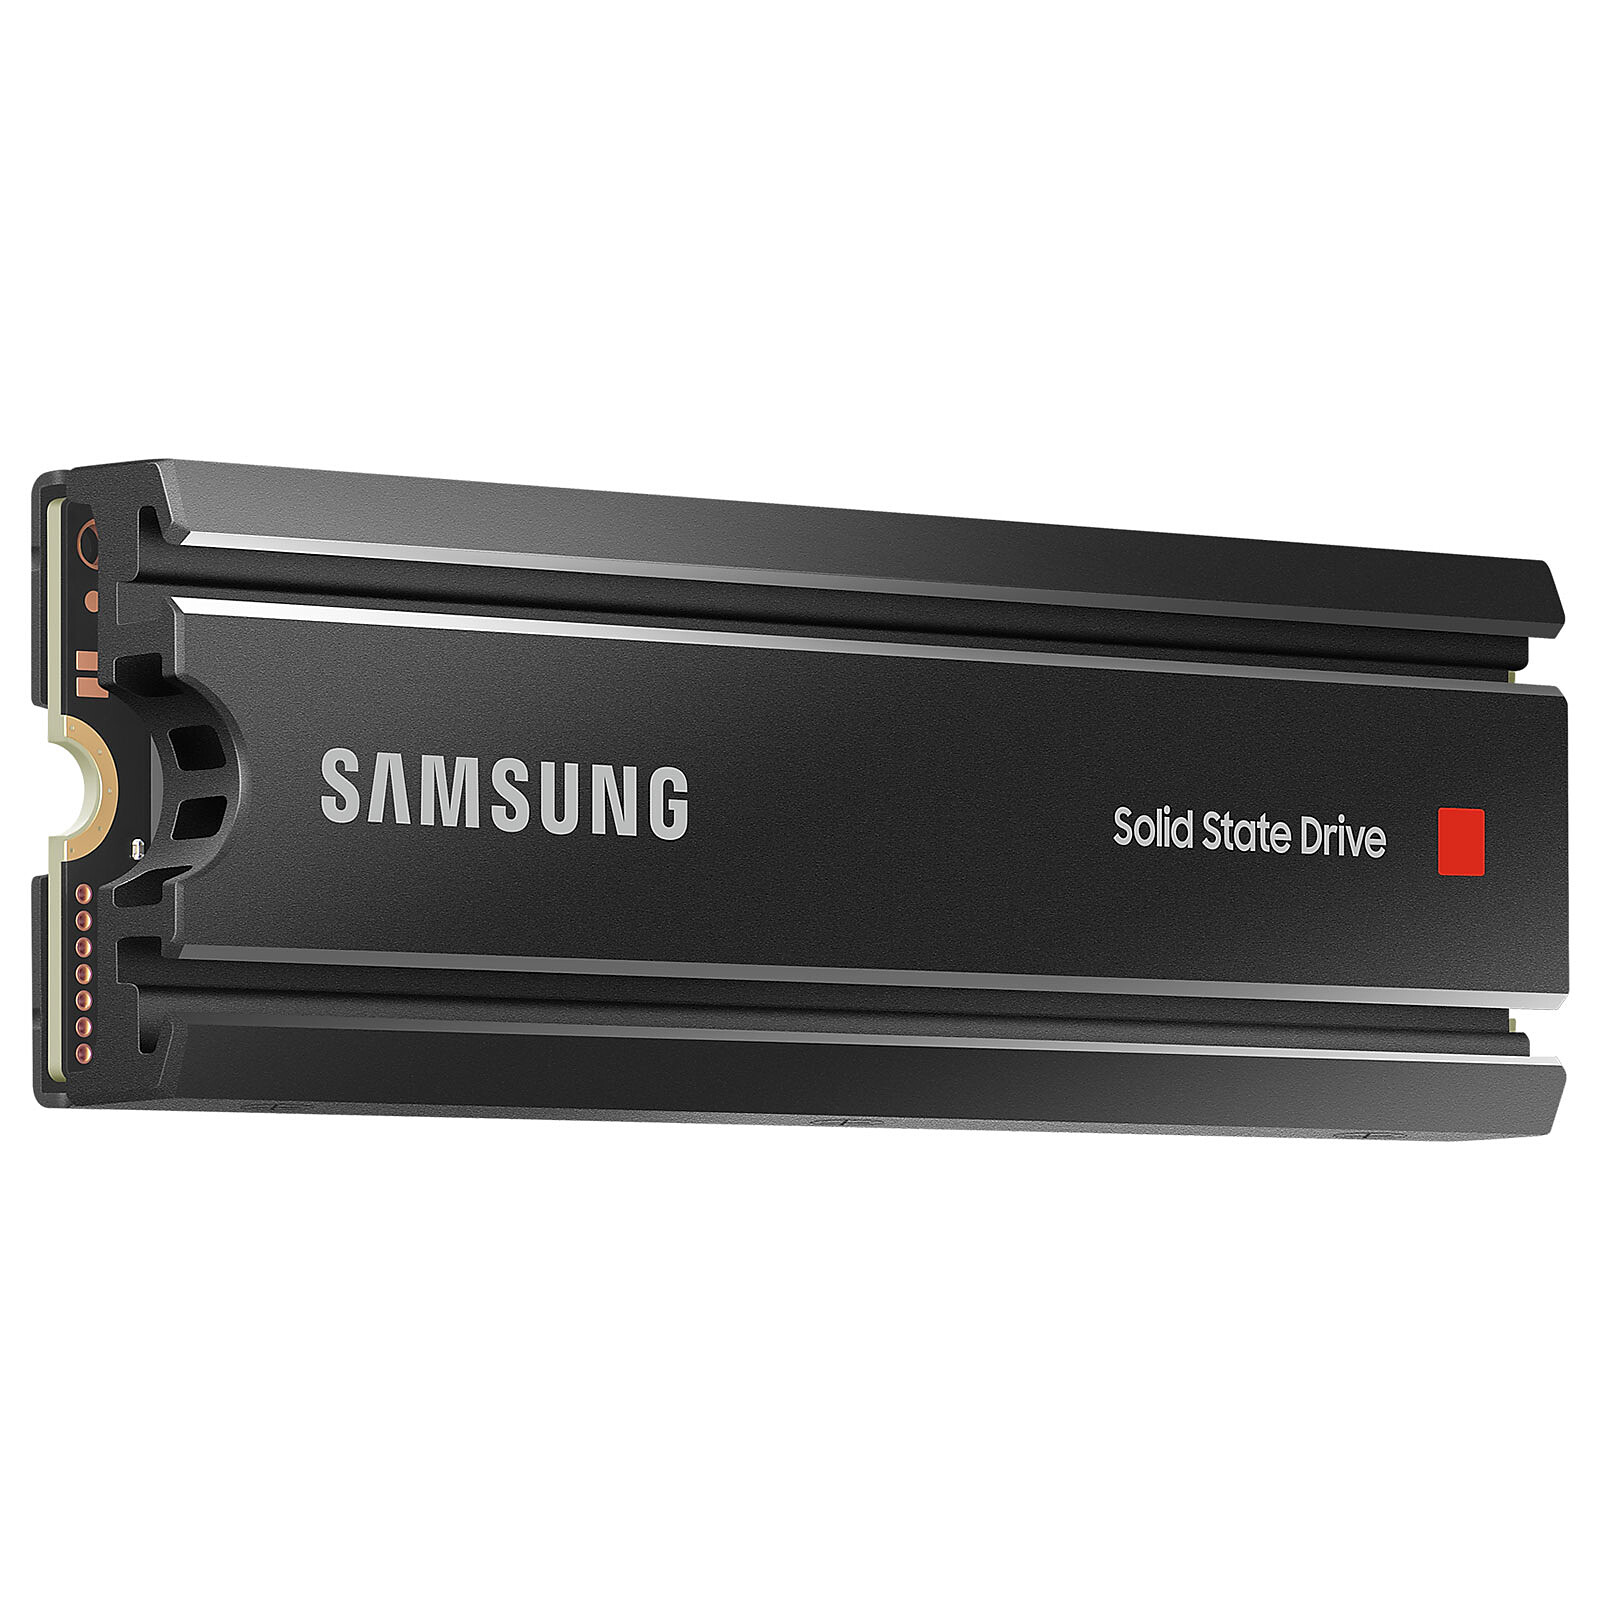 Samsung SSD 980 PRO M.2 PCIe NVMe 1TB with heatsink